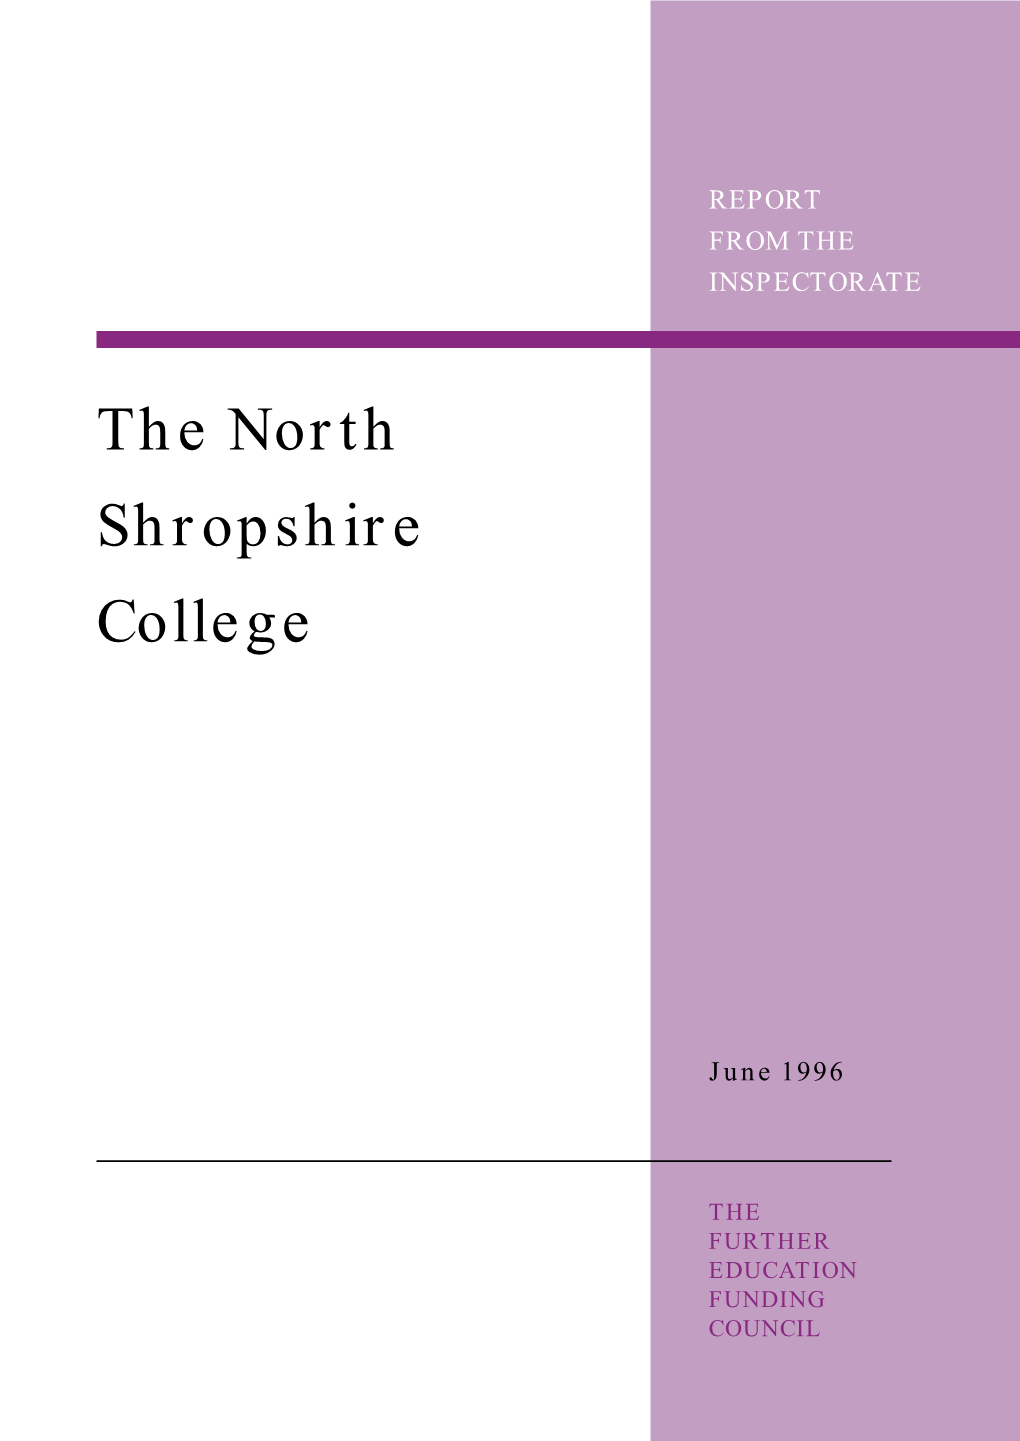 The North Shropshire College